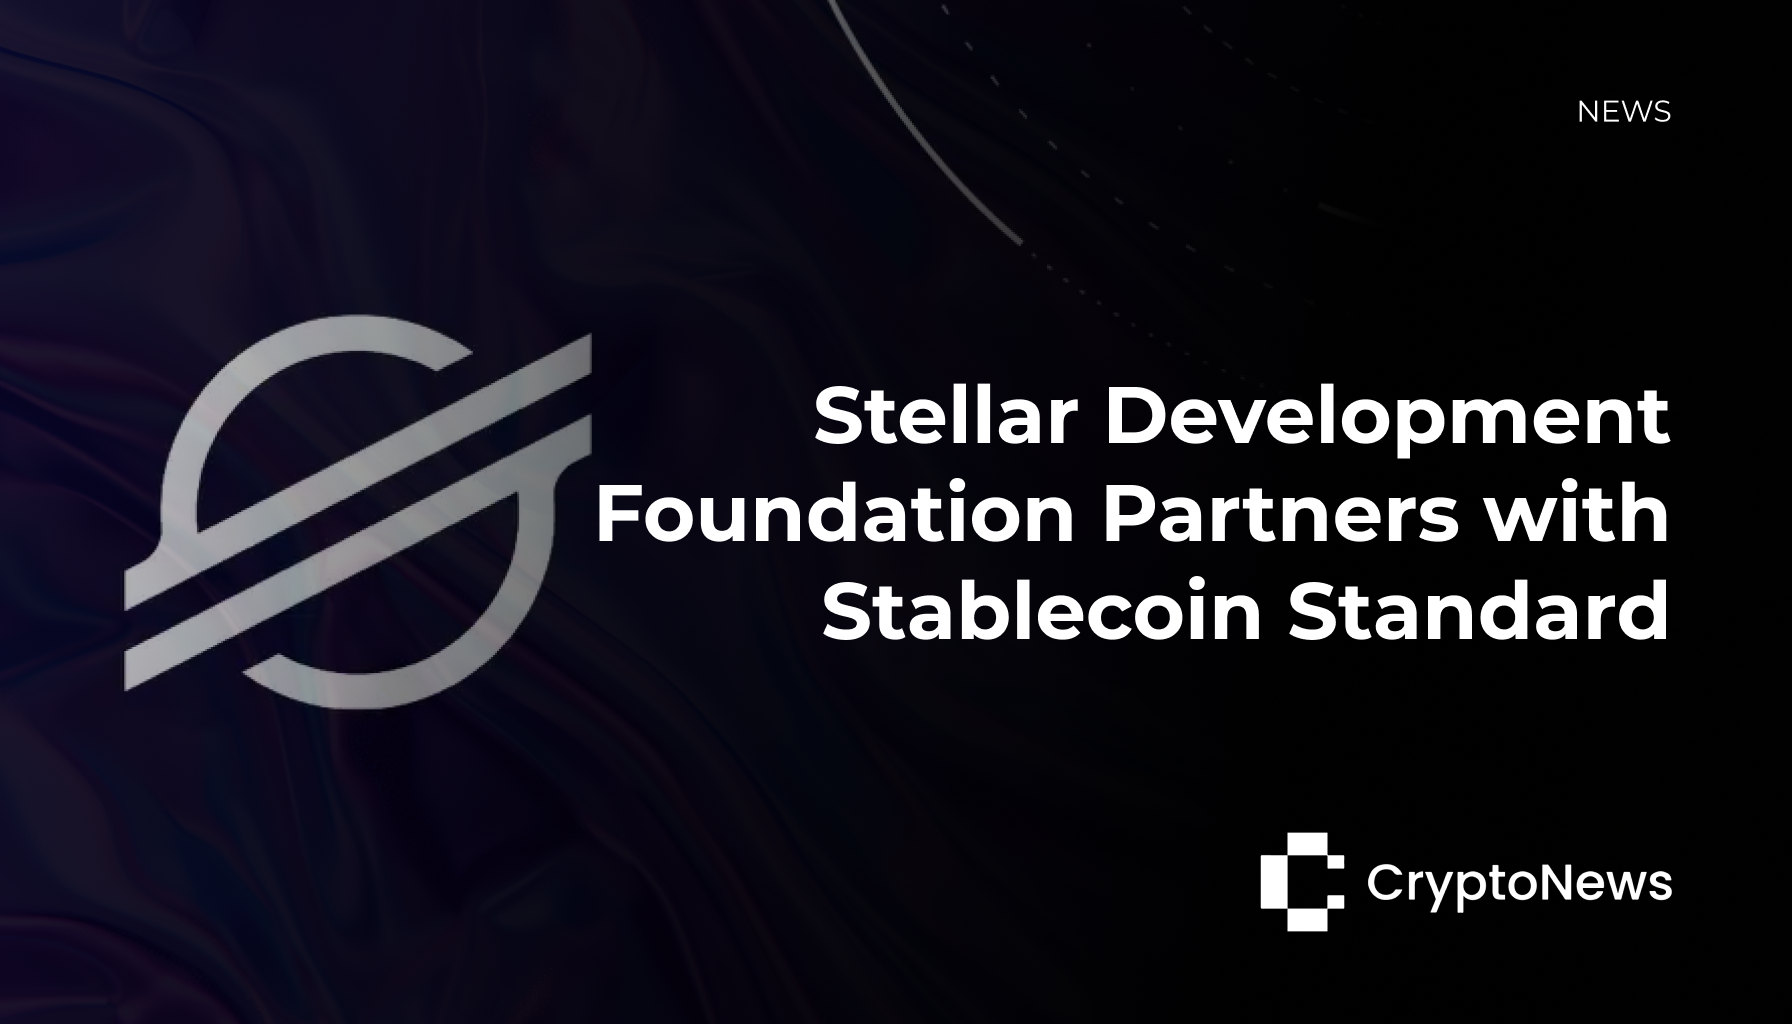 Stellar Development Foundation logo with the text "Stellar Development Foundation Partners with Stablecoin Standard"